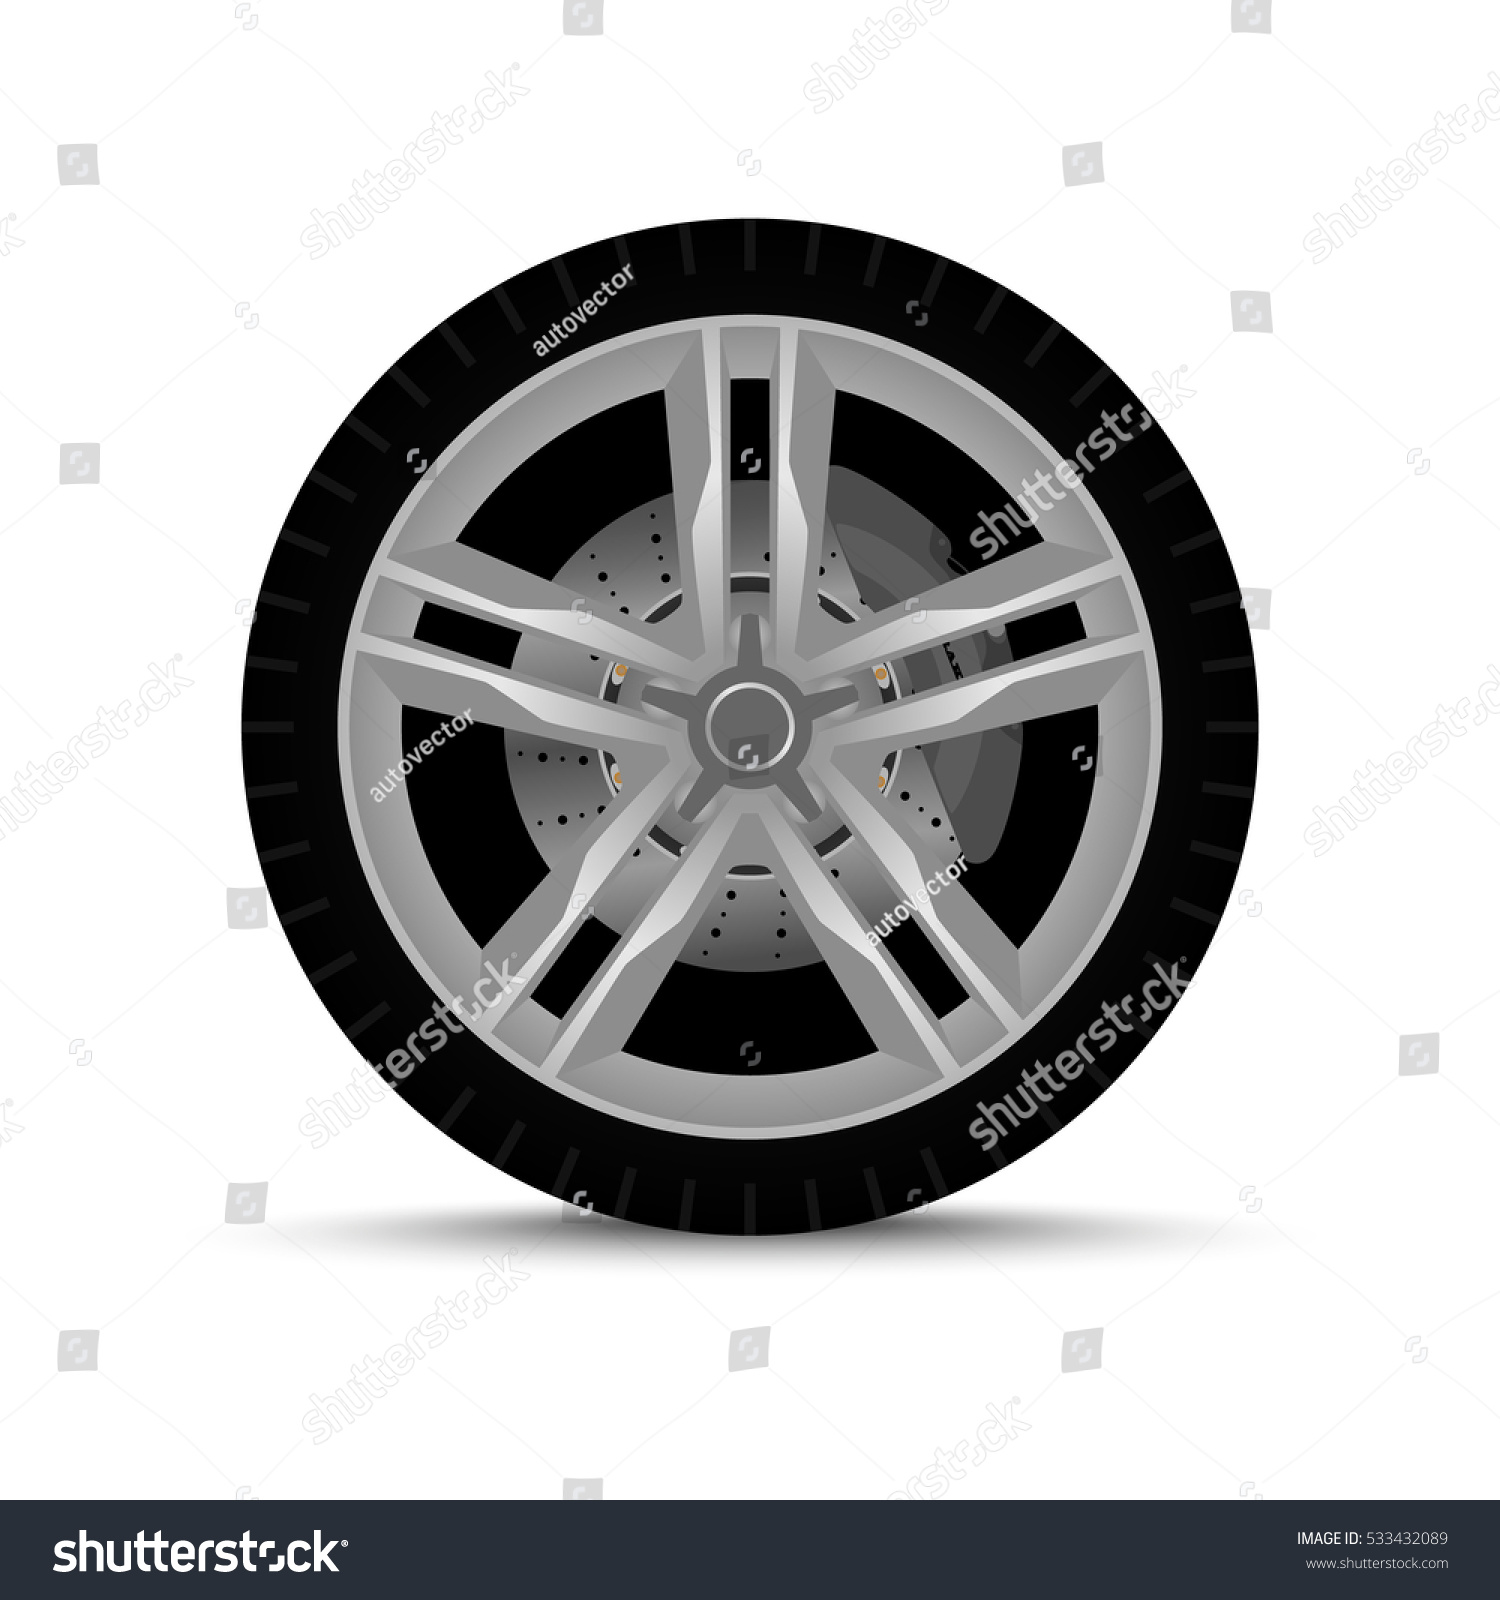 Edit Vectors Free Online car wheel Shutterstock Editor